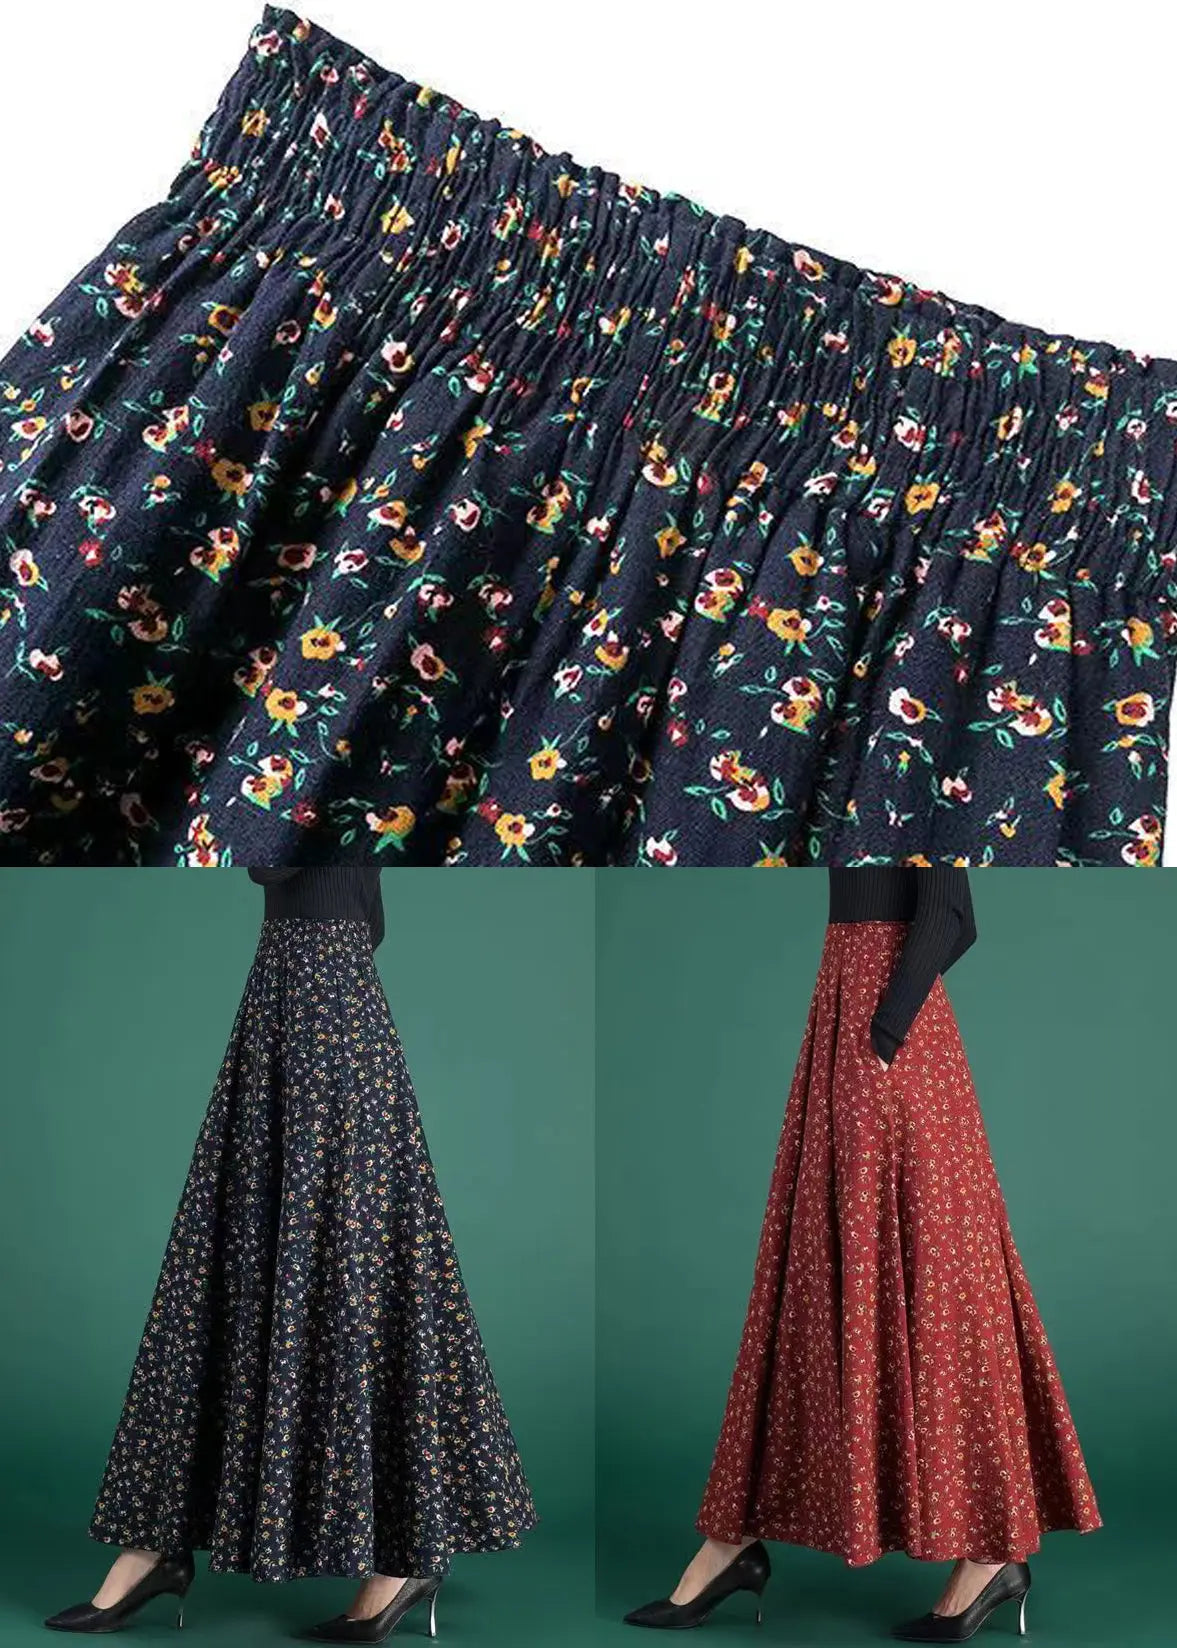 Red Pockets Patchwork Cotton Skirts High Waist Fall Ada Fashion